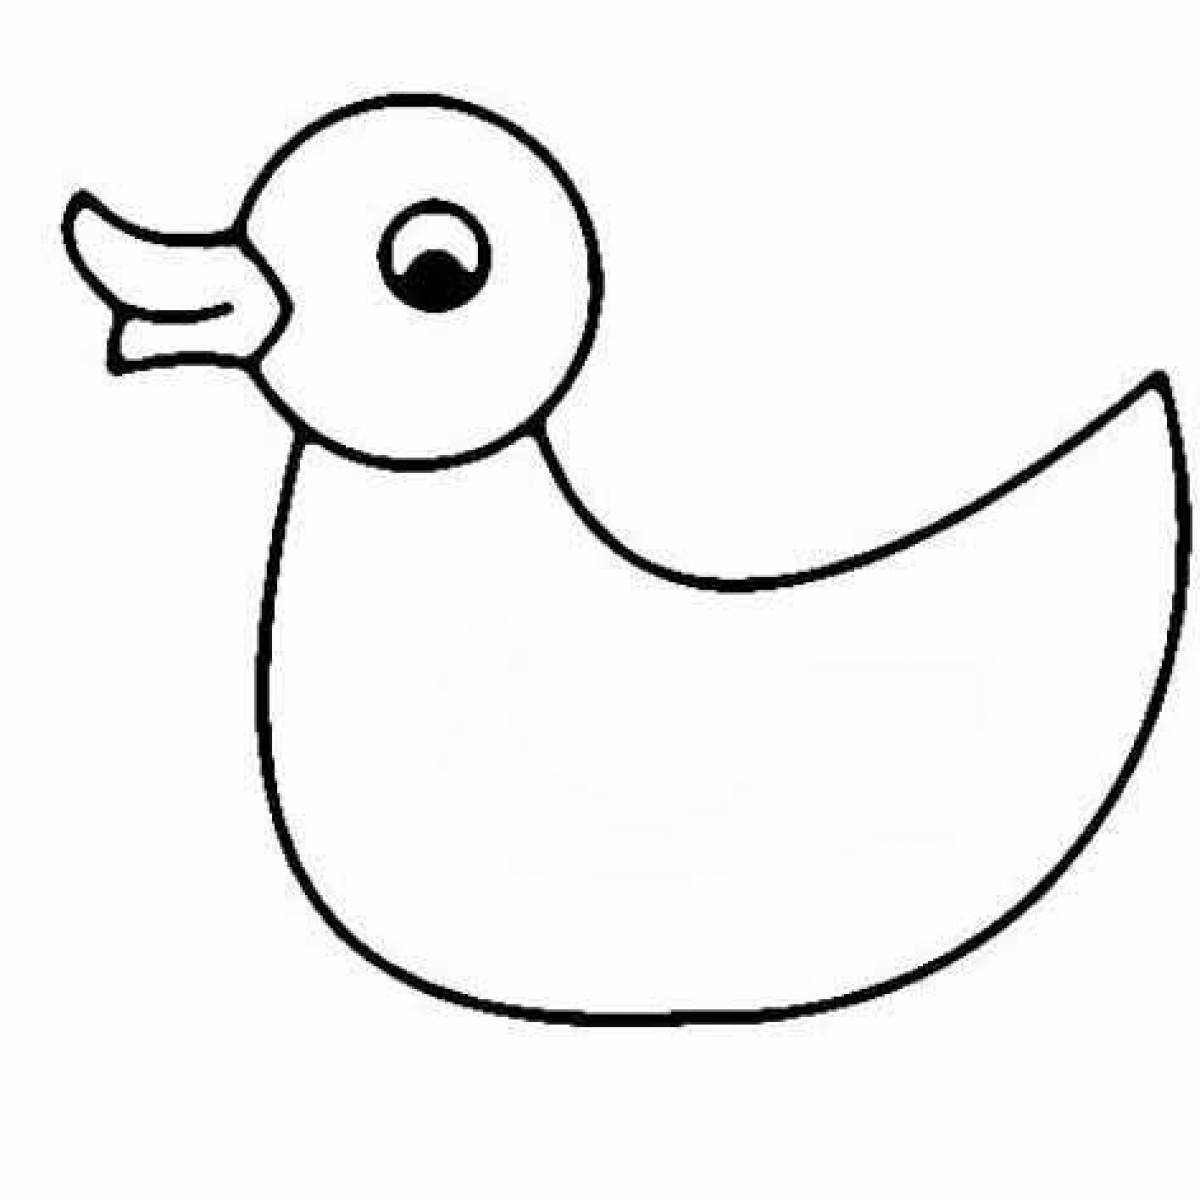 Delightful Dymkovo duck coloring book